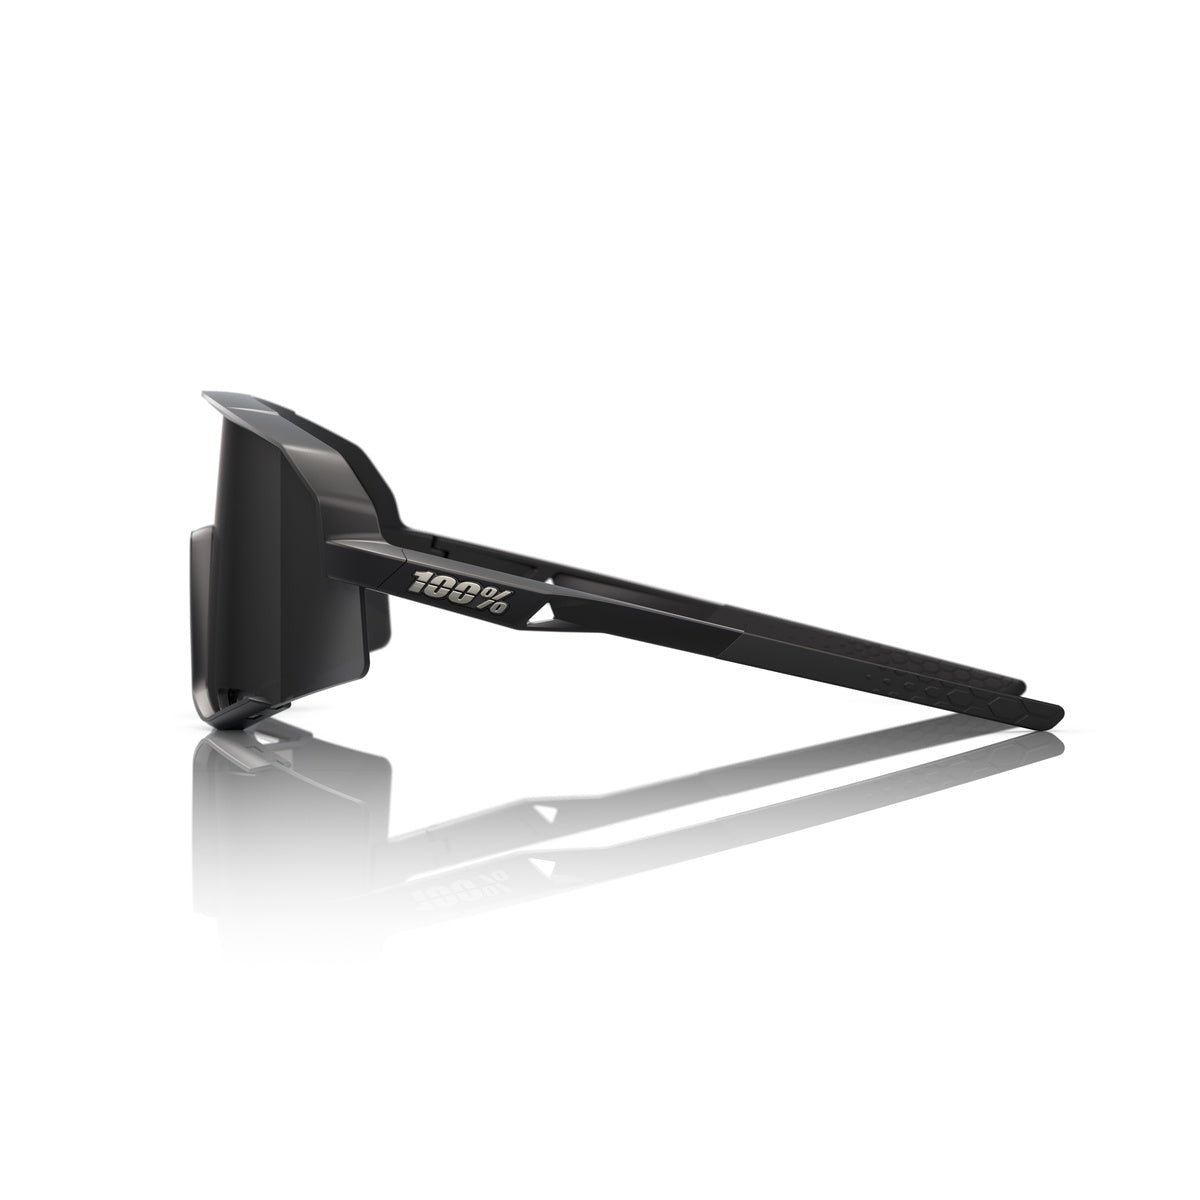 100 Percent Slendale Sunglasses - One Size Fits Most - Matte Black - Smoke Lens